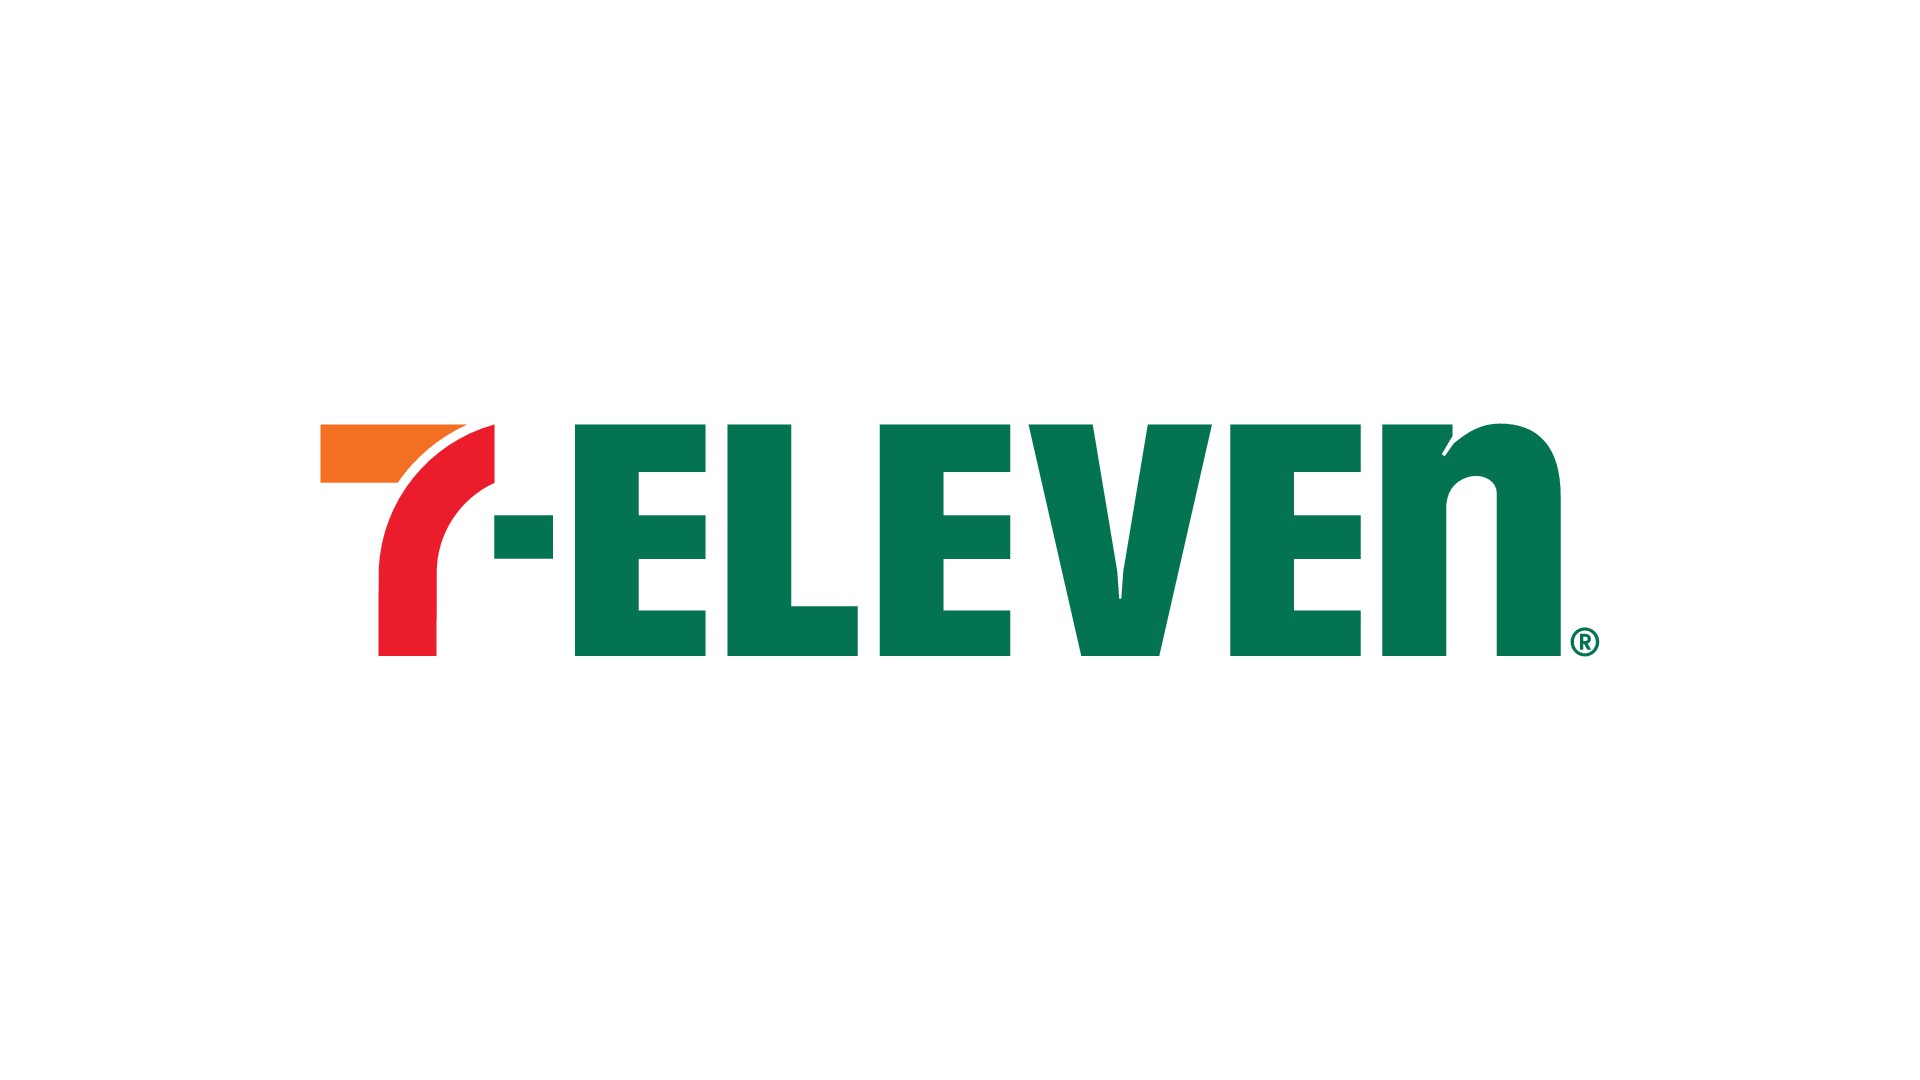 Logo for sponsor 7/Eleven